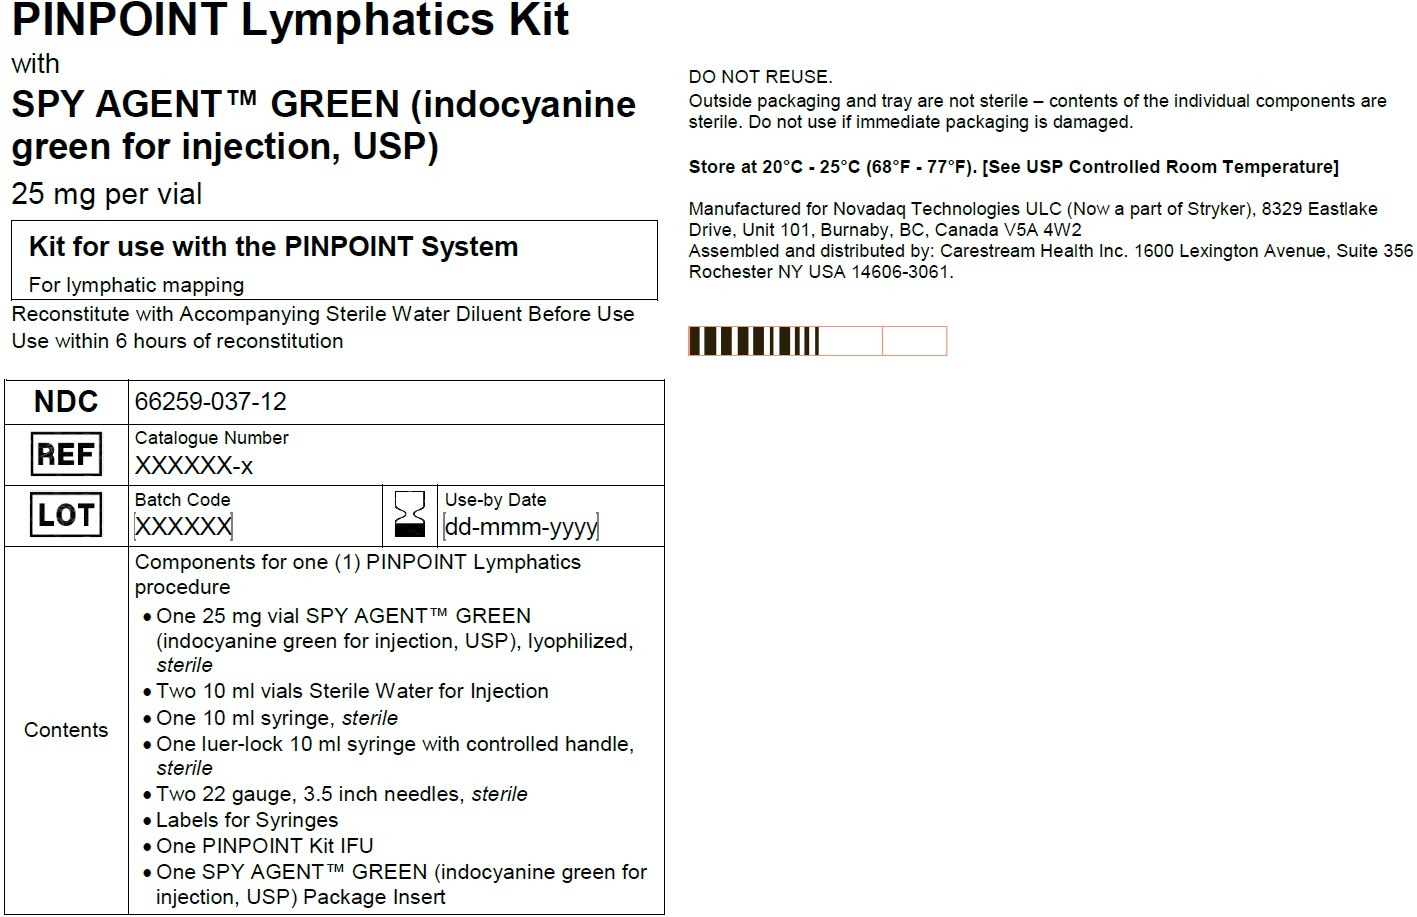 PINPOINT Lymphatics Kit Label